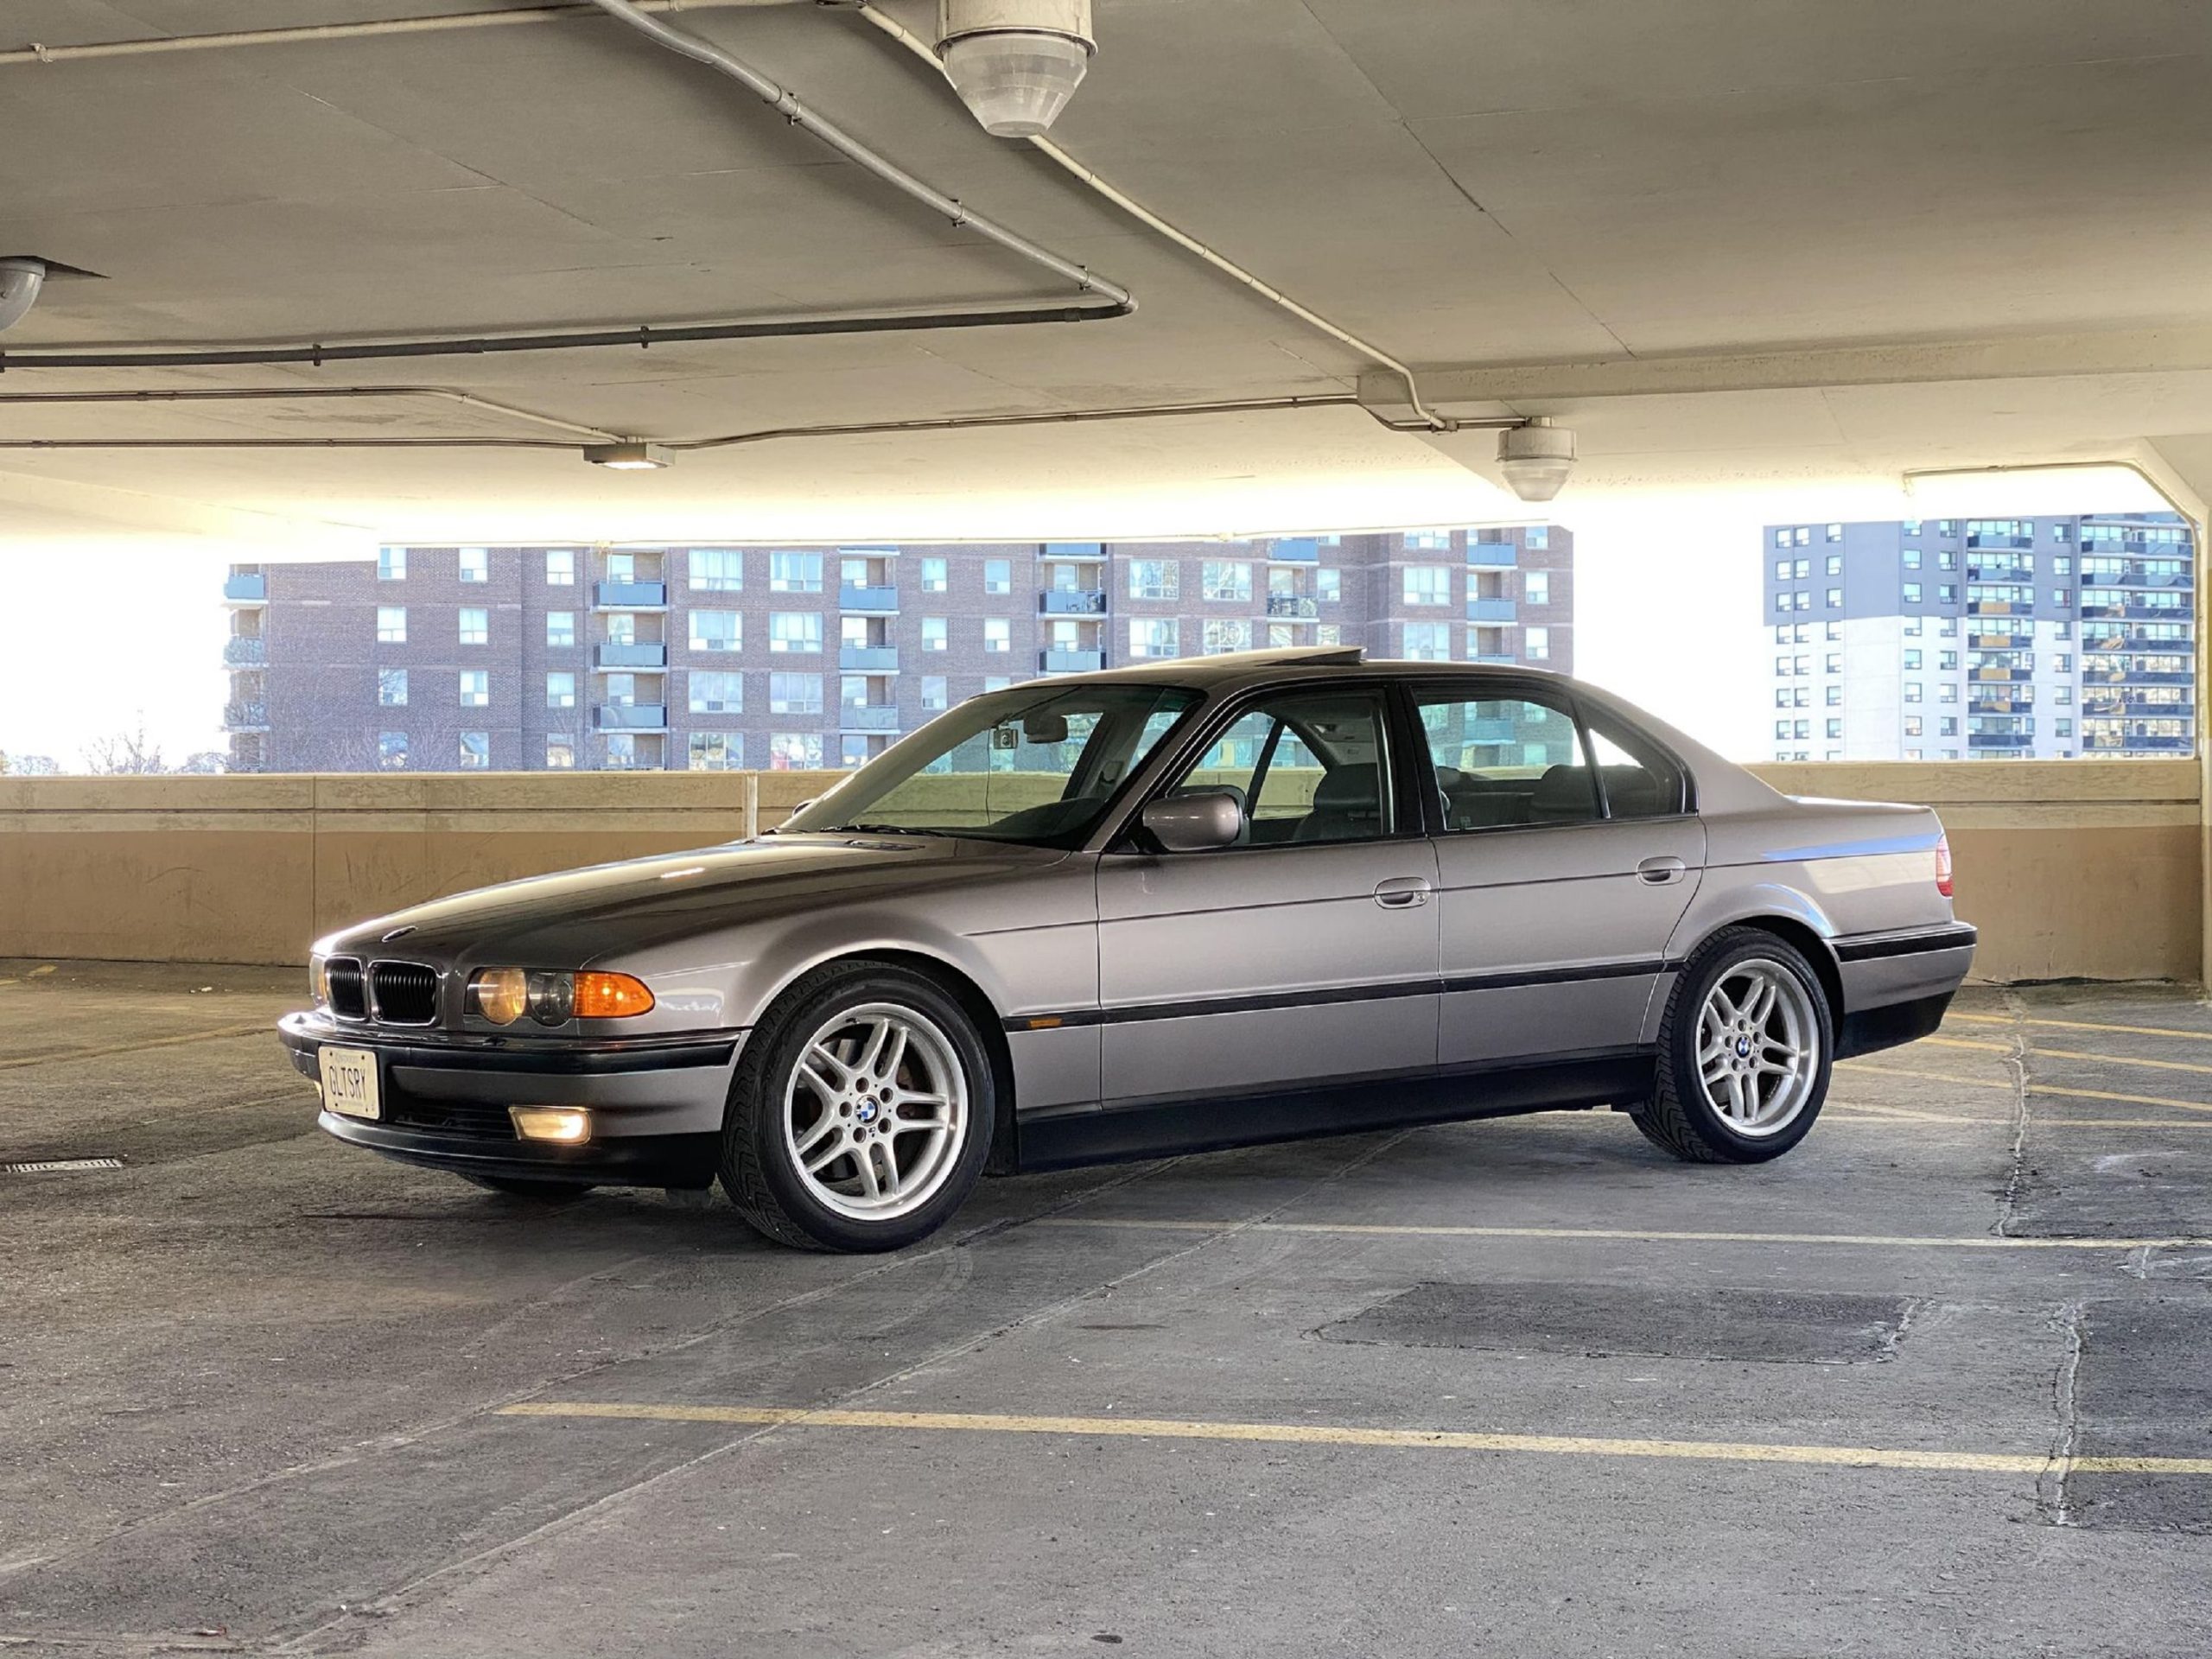 A gray 2000 E38 BMW 740i M Sport in a city parking garage